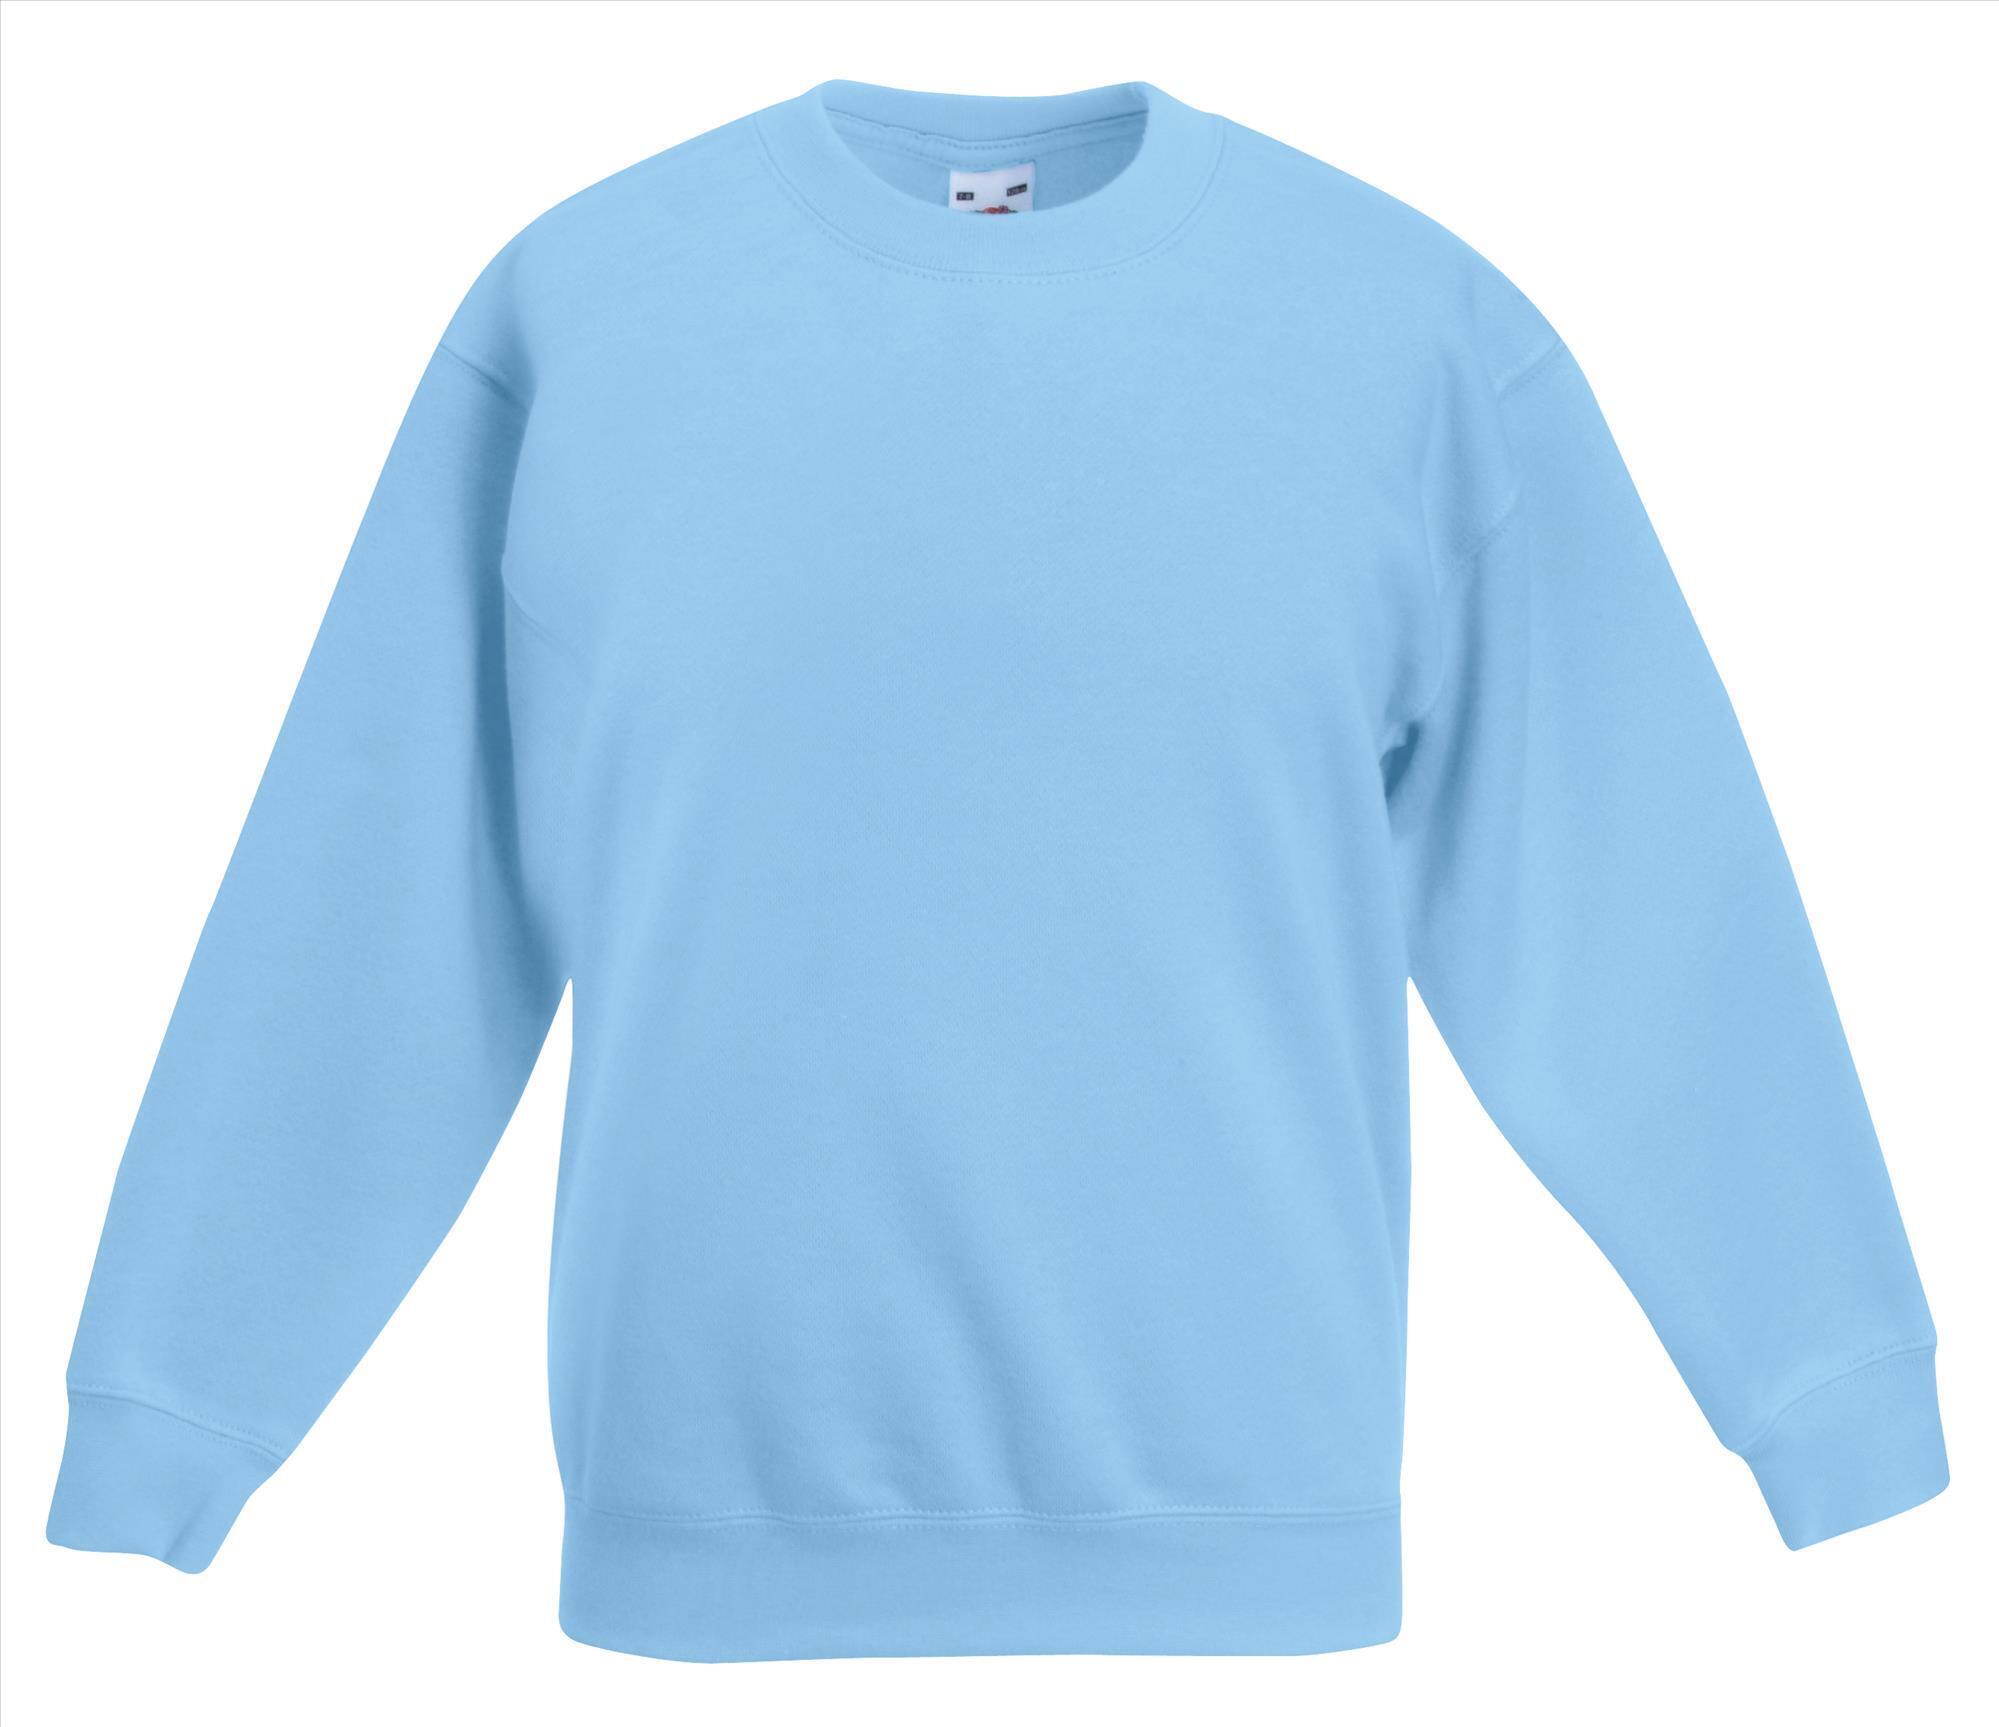 Sky blauwe kinder trui Kinder sweater Premium